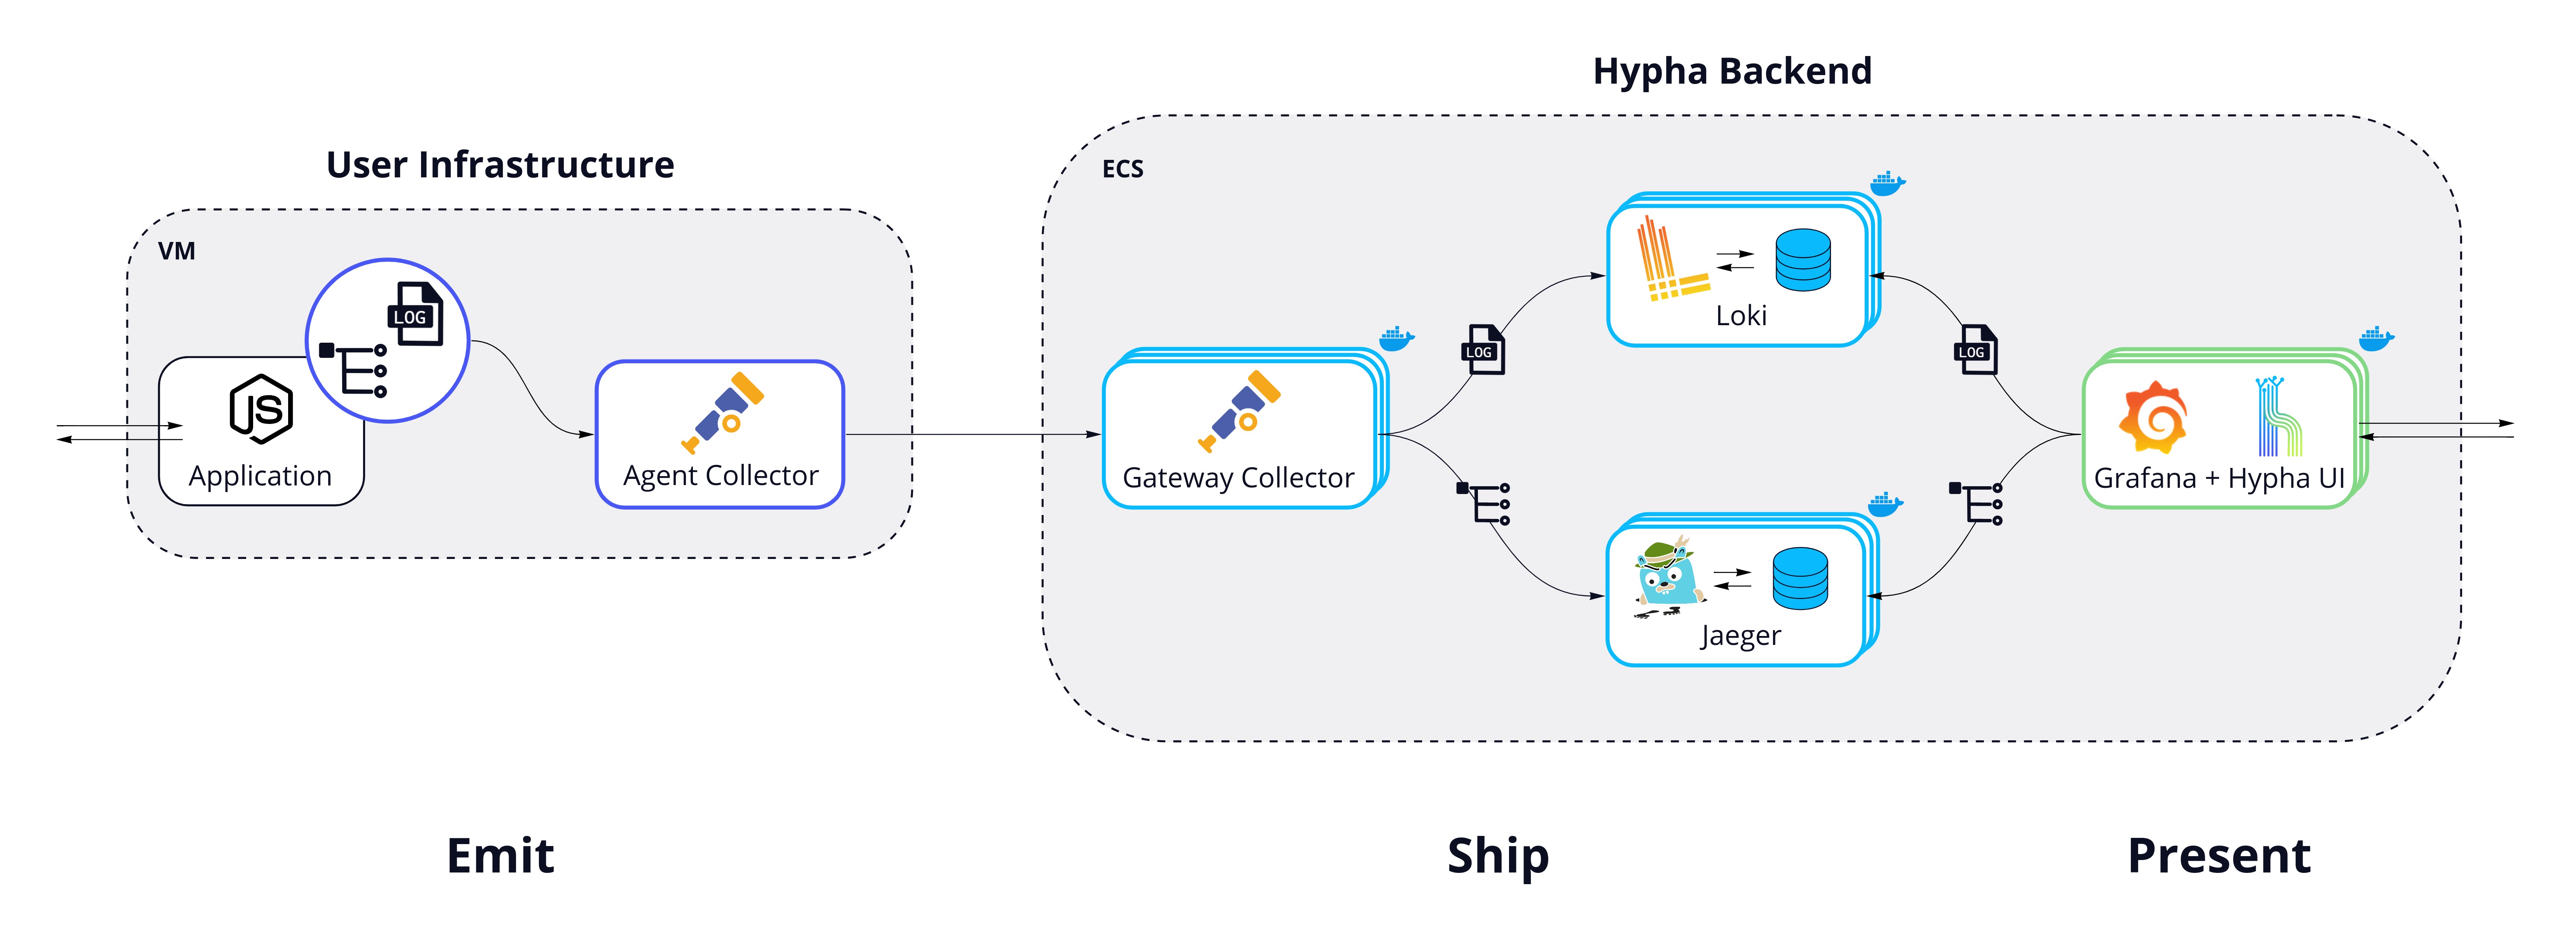 Hypha's architecture diagram